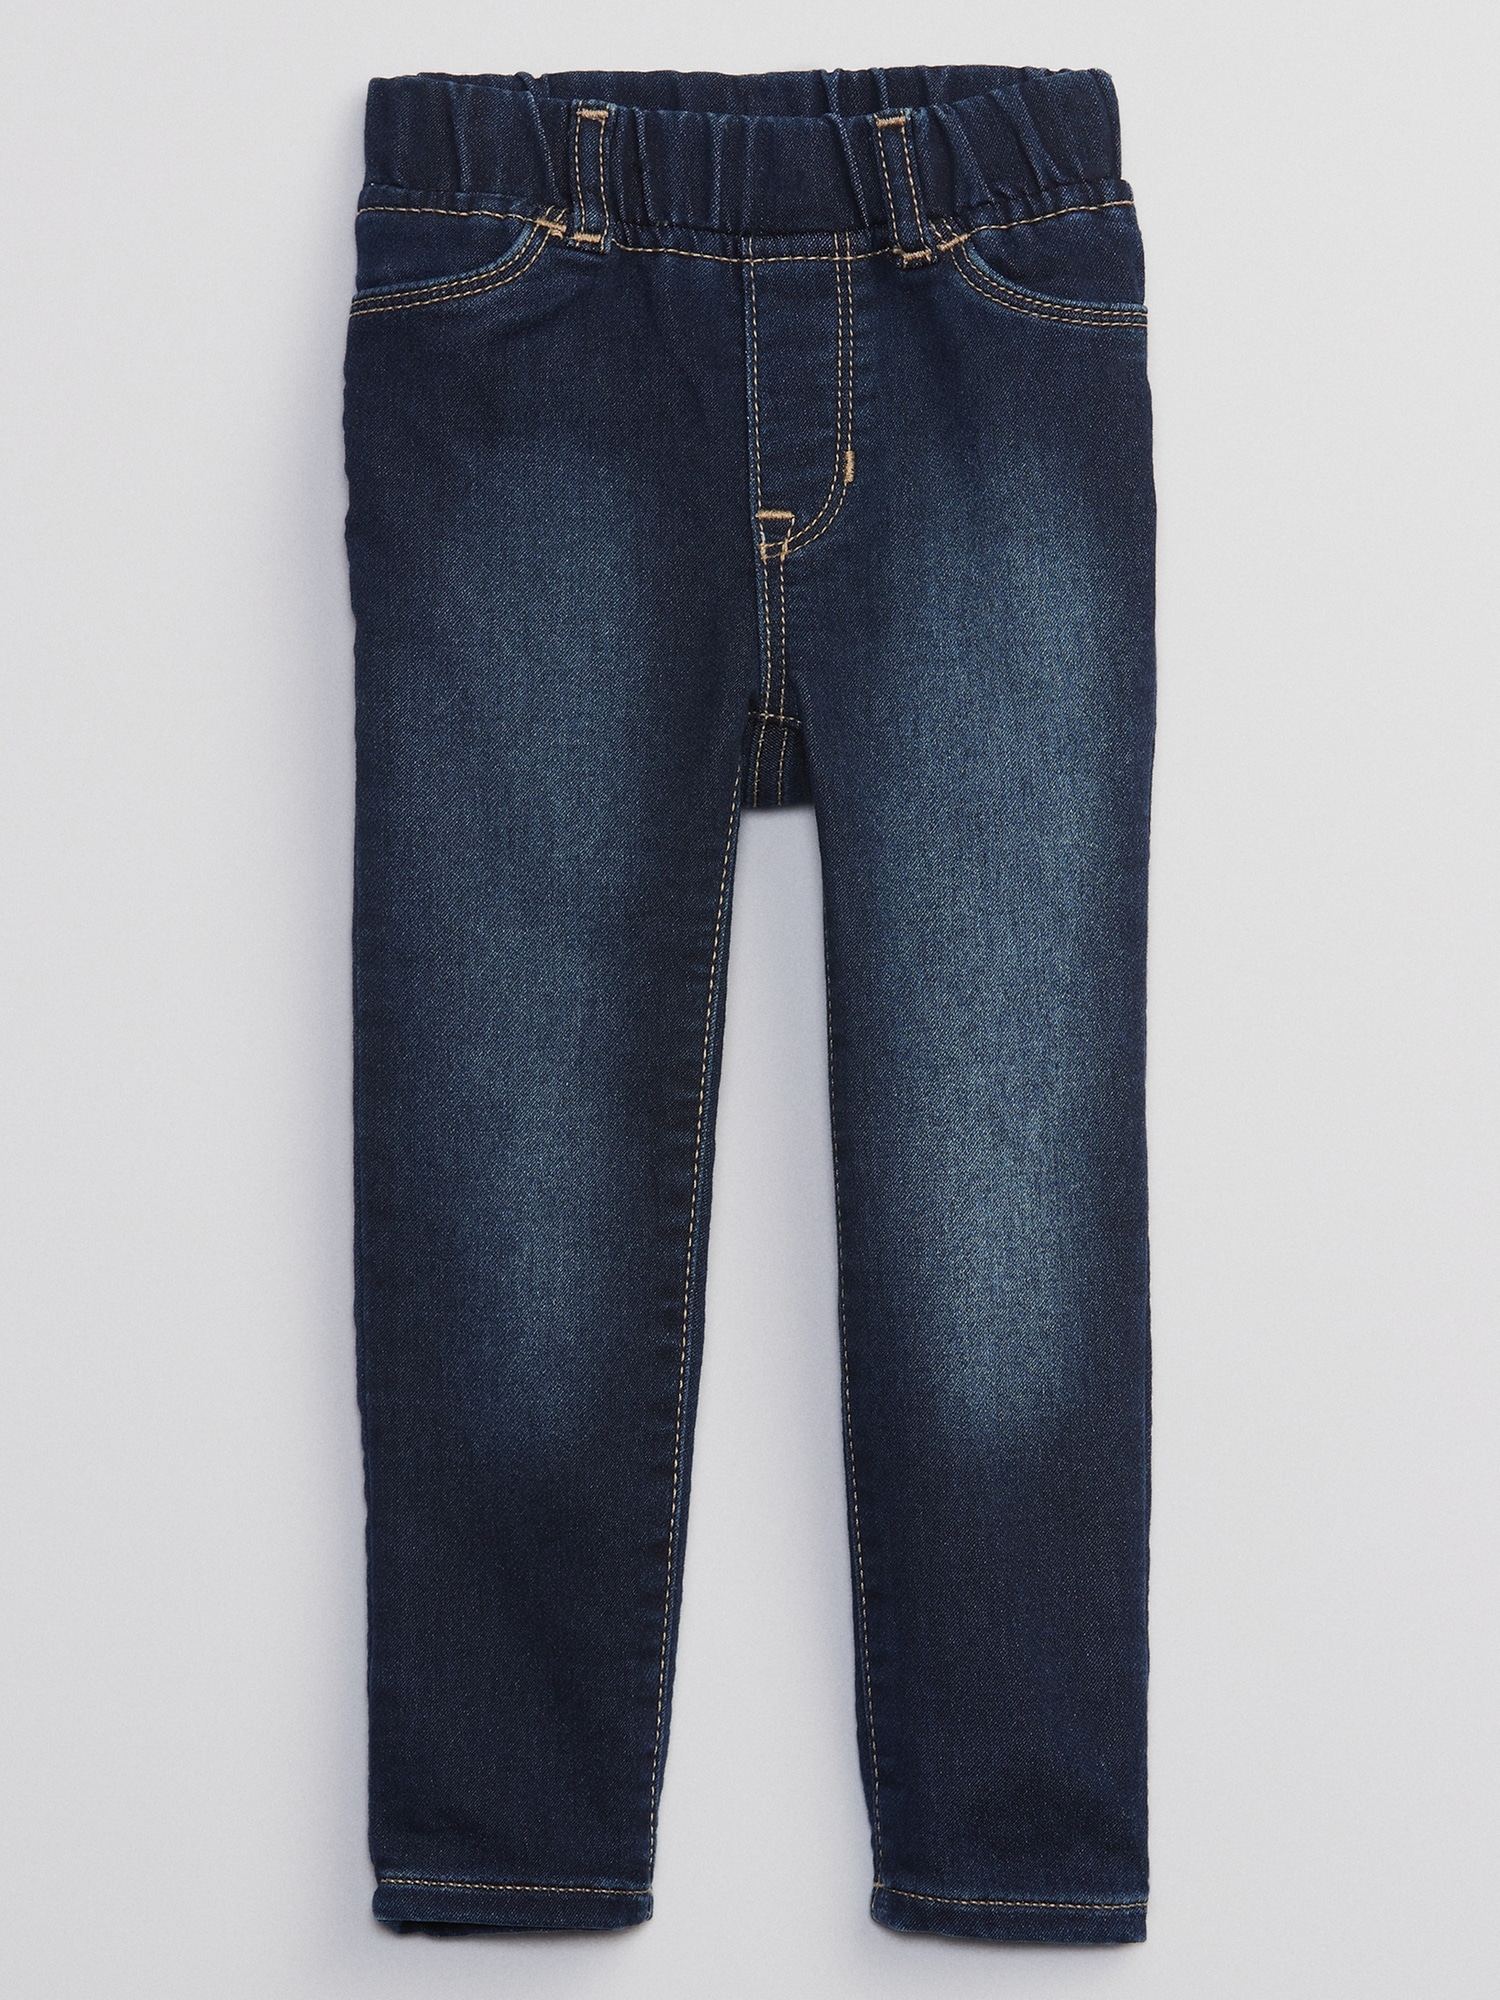 Buy Blue Denim Jeans & Jeggings for Women by GO COLORS Online | Ajio.com